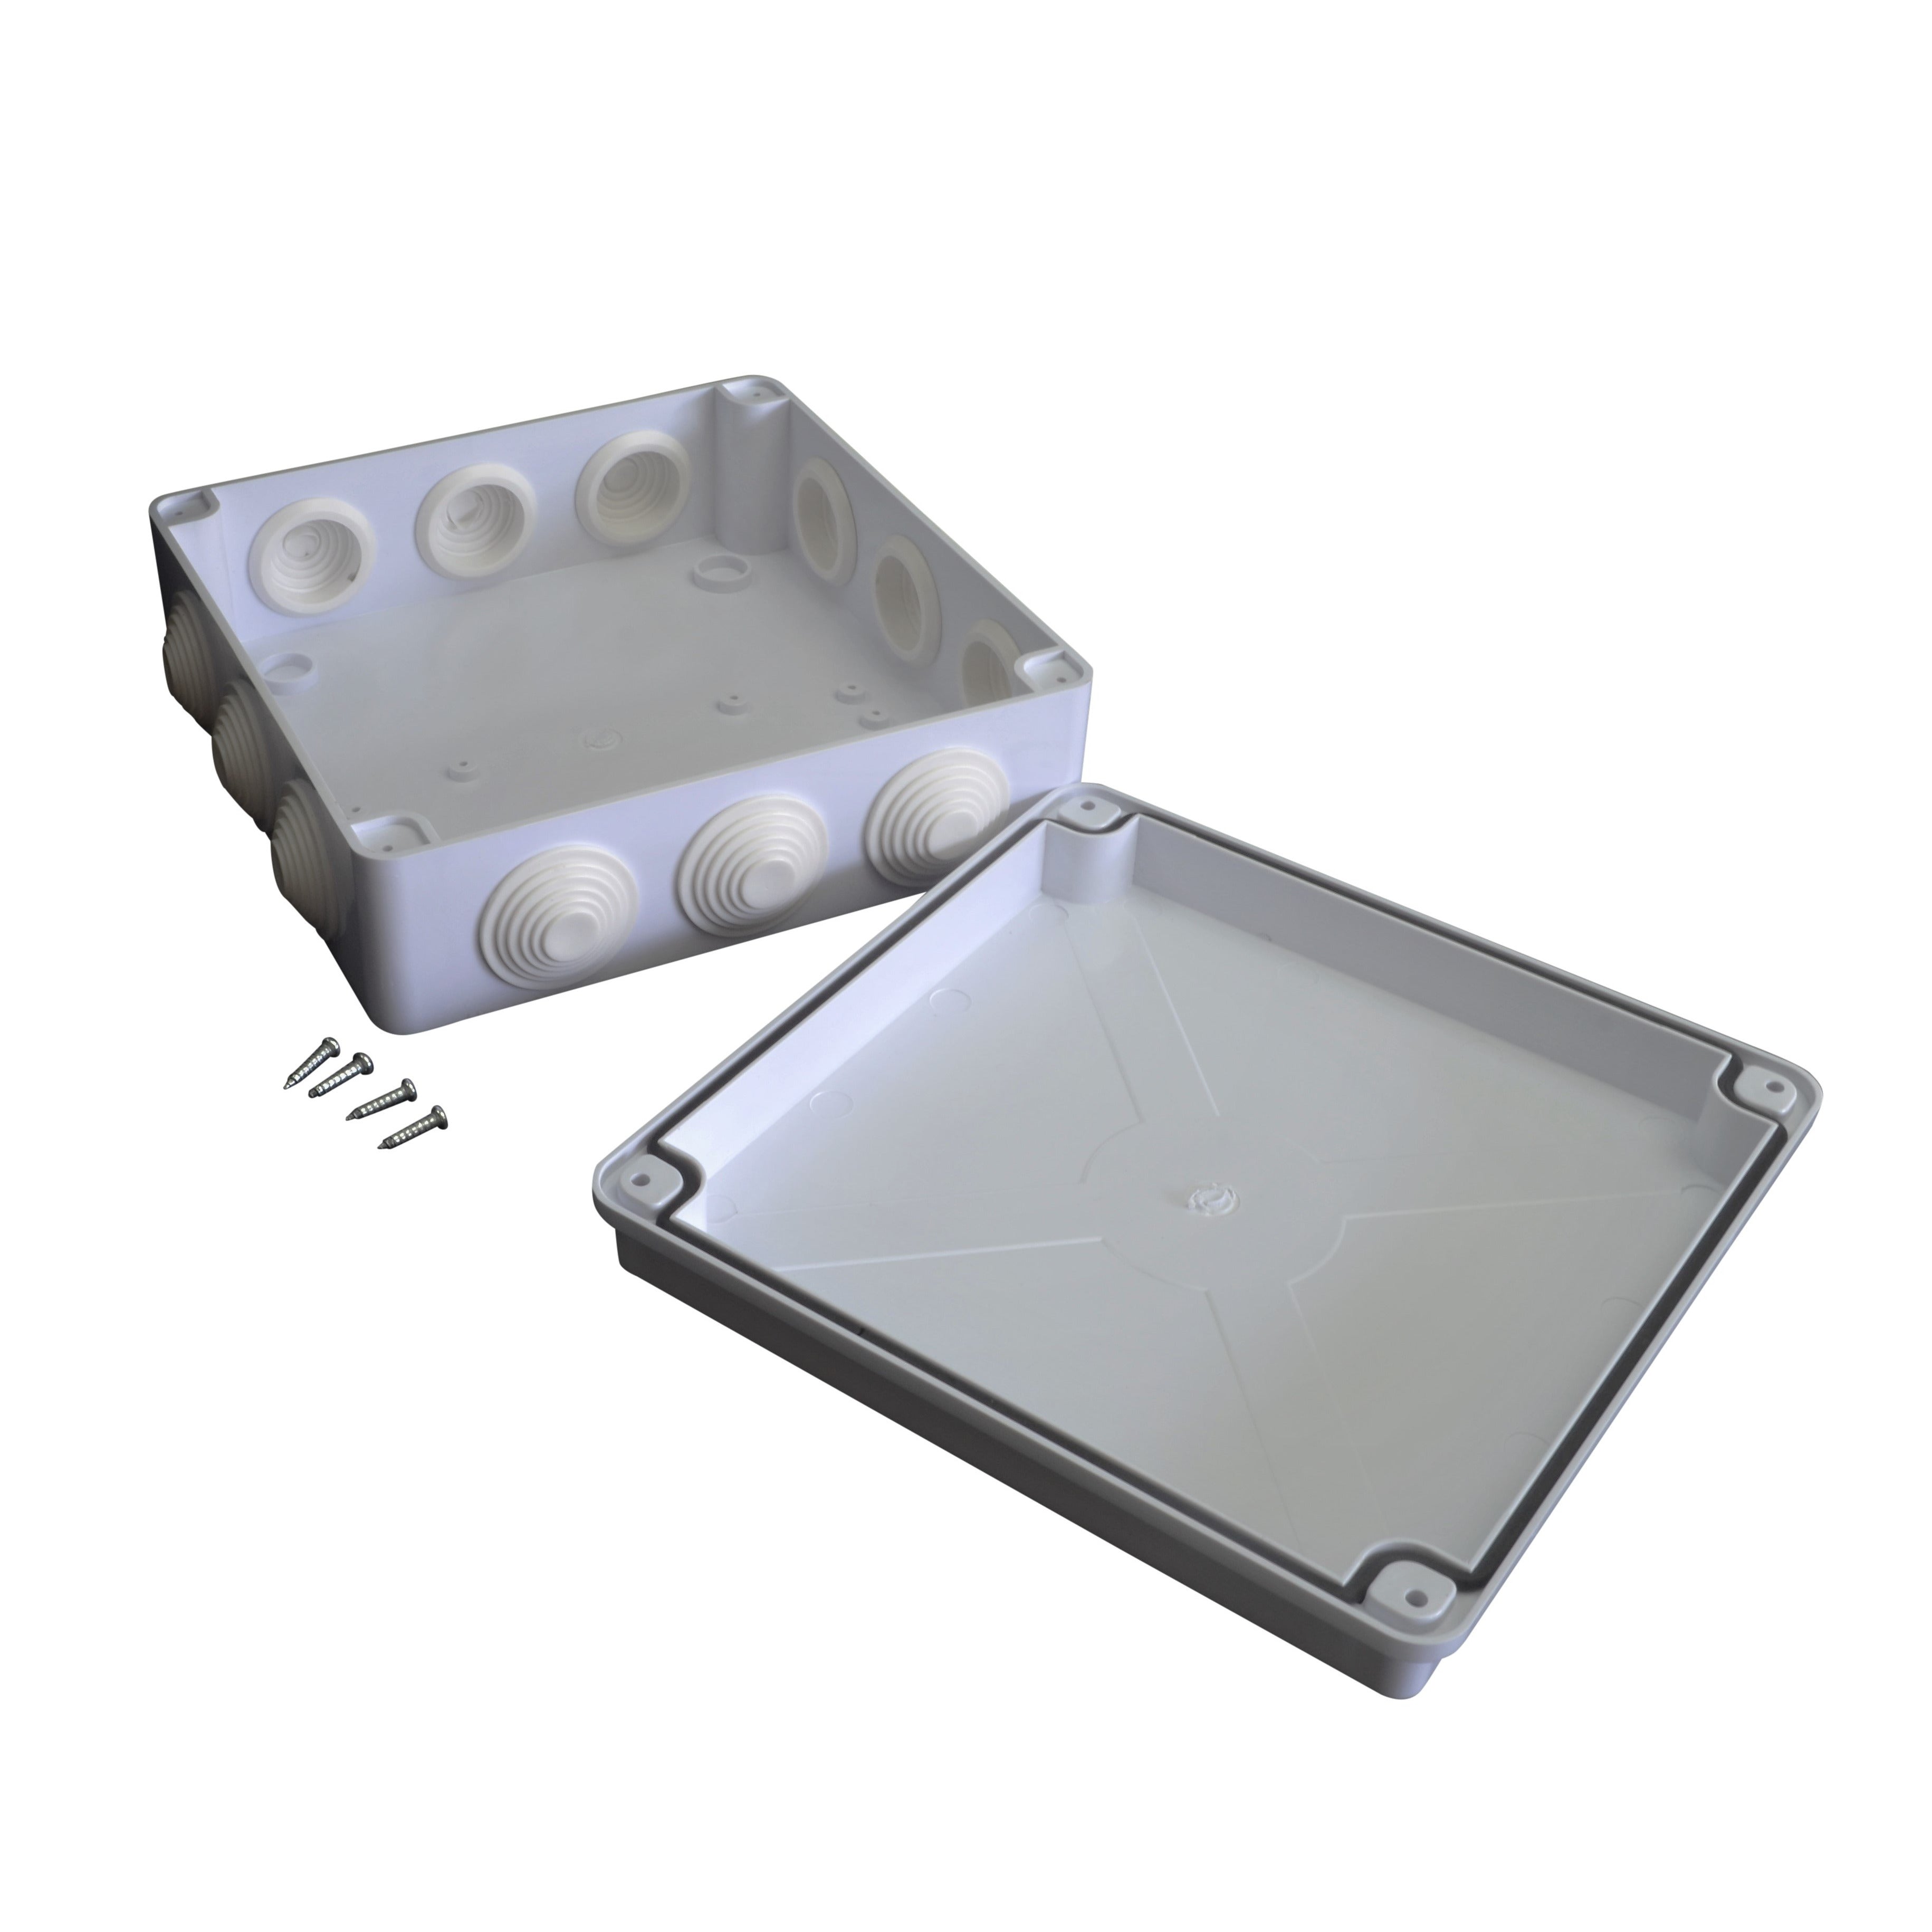 200x200x80 mm ABS Plastic IP65 Waterproof Junction Box